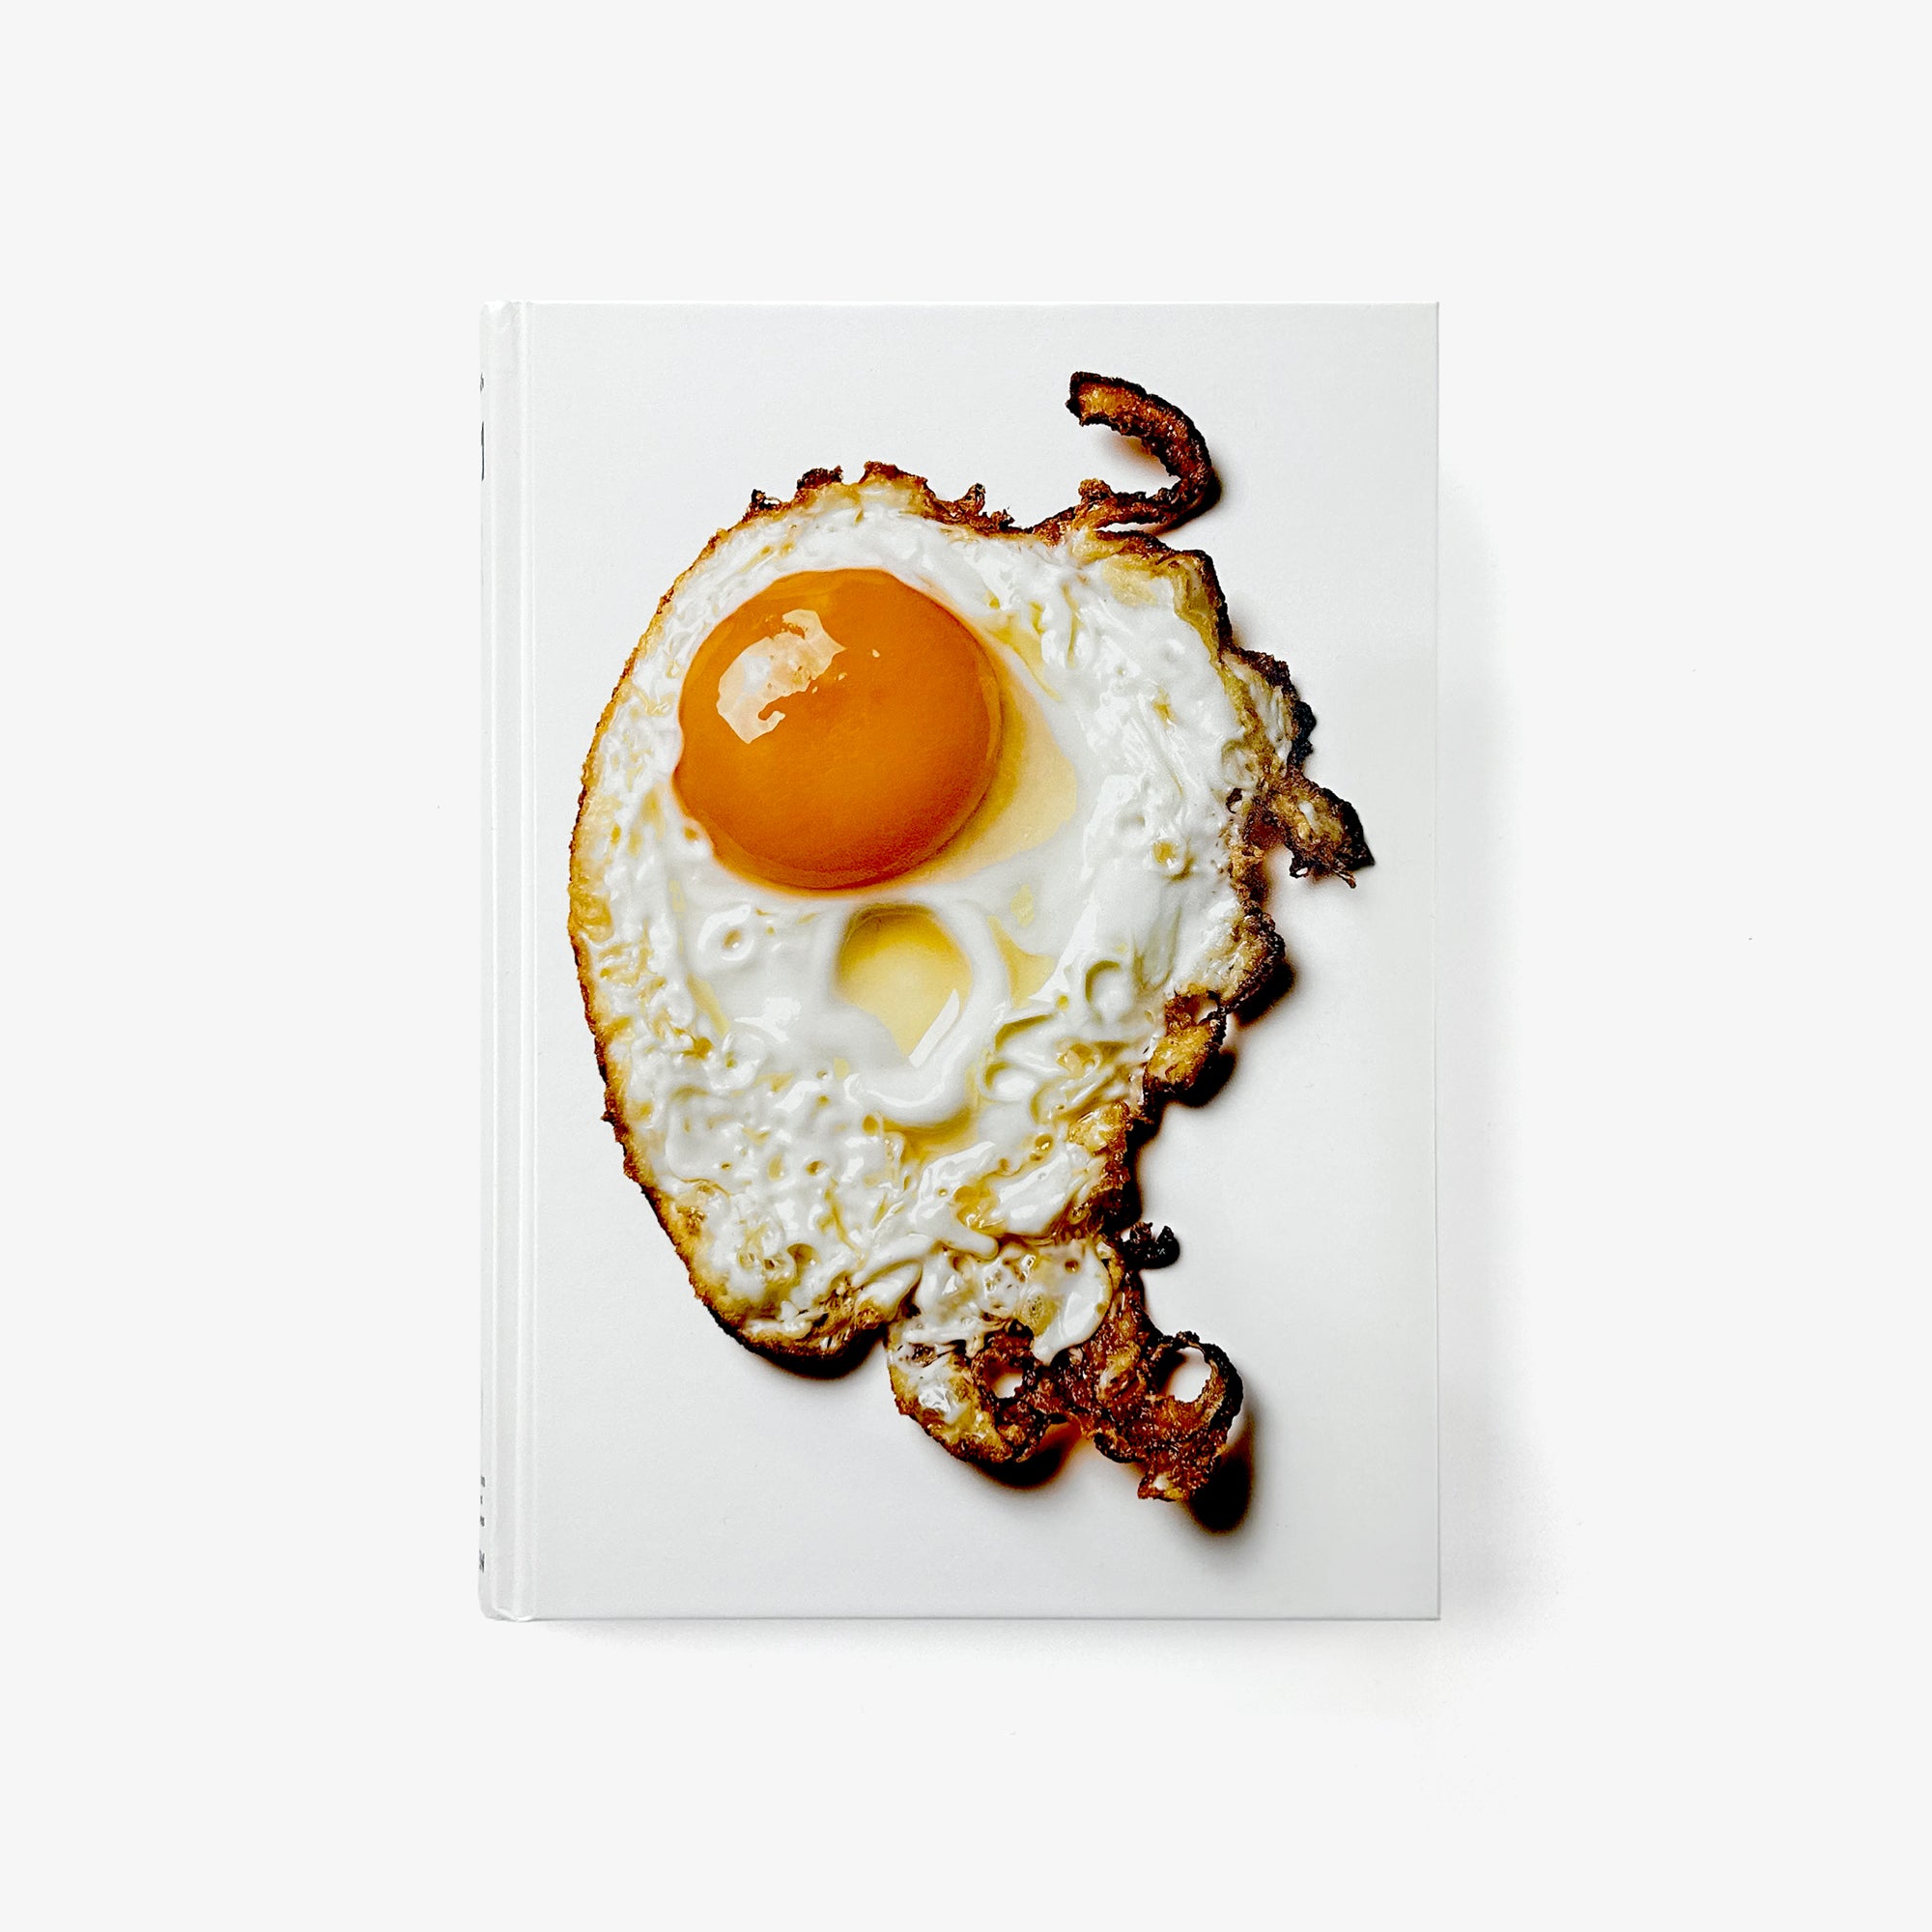 The Gourmand’s Egg